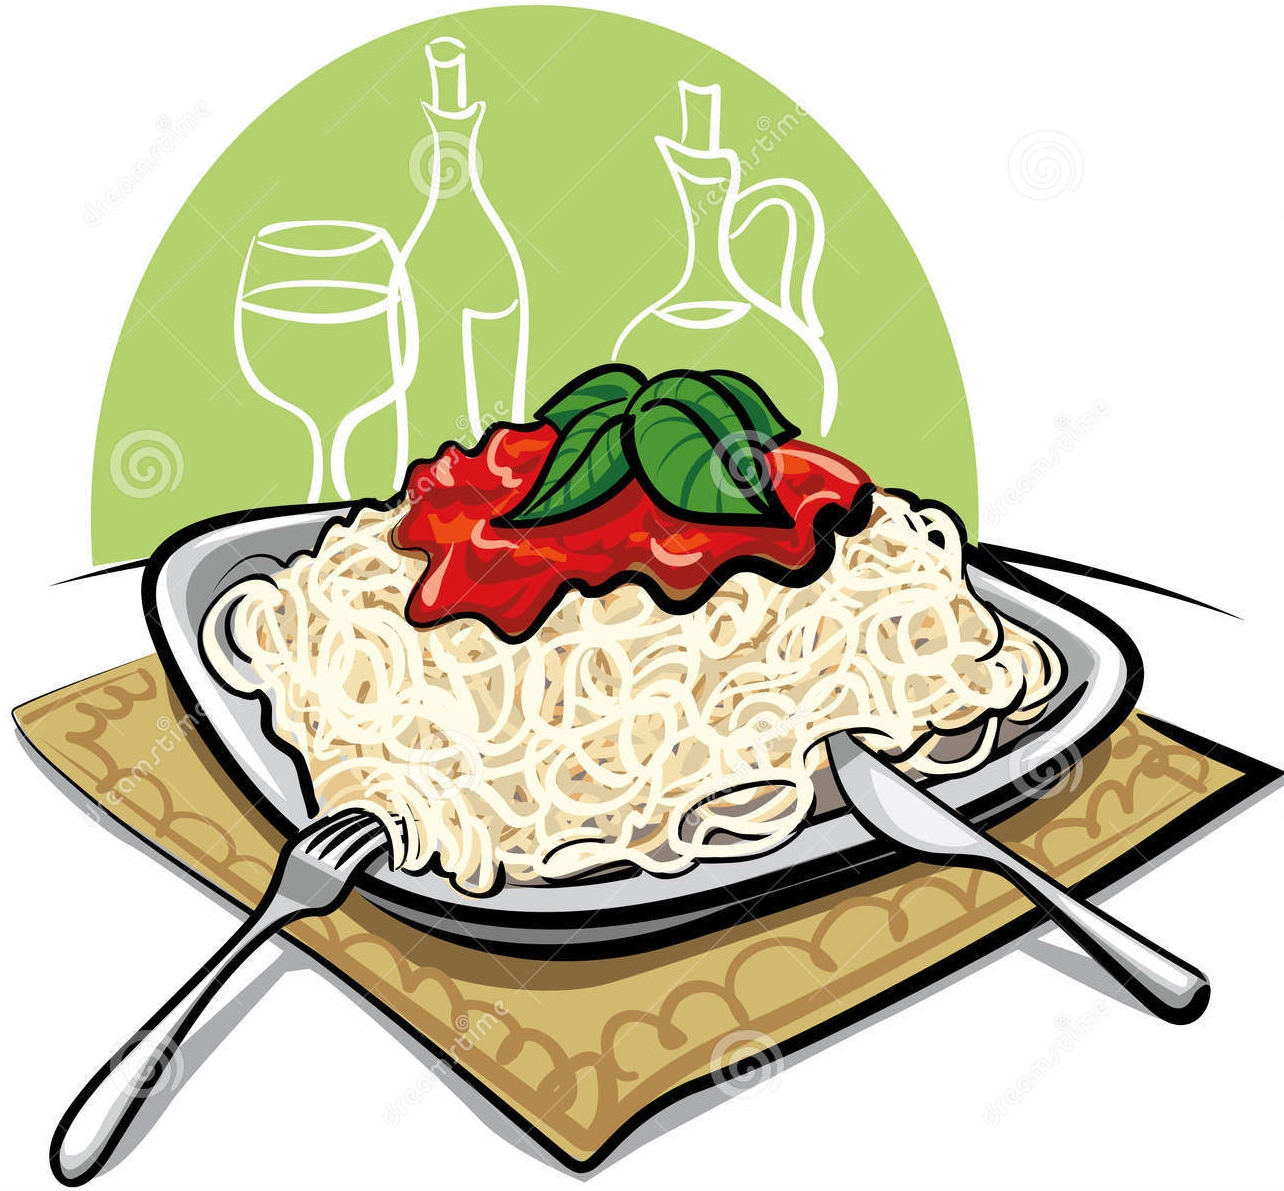 Spaghetti Dinner Clipart